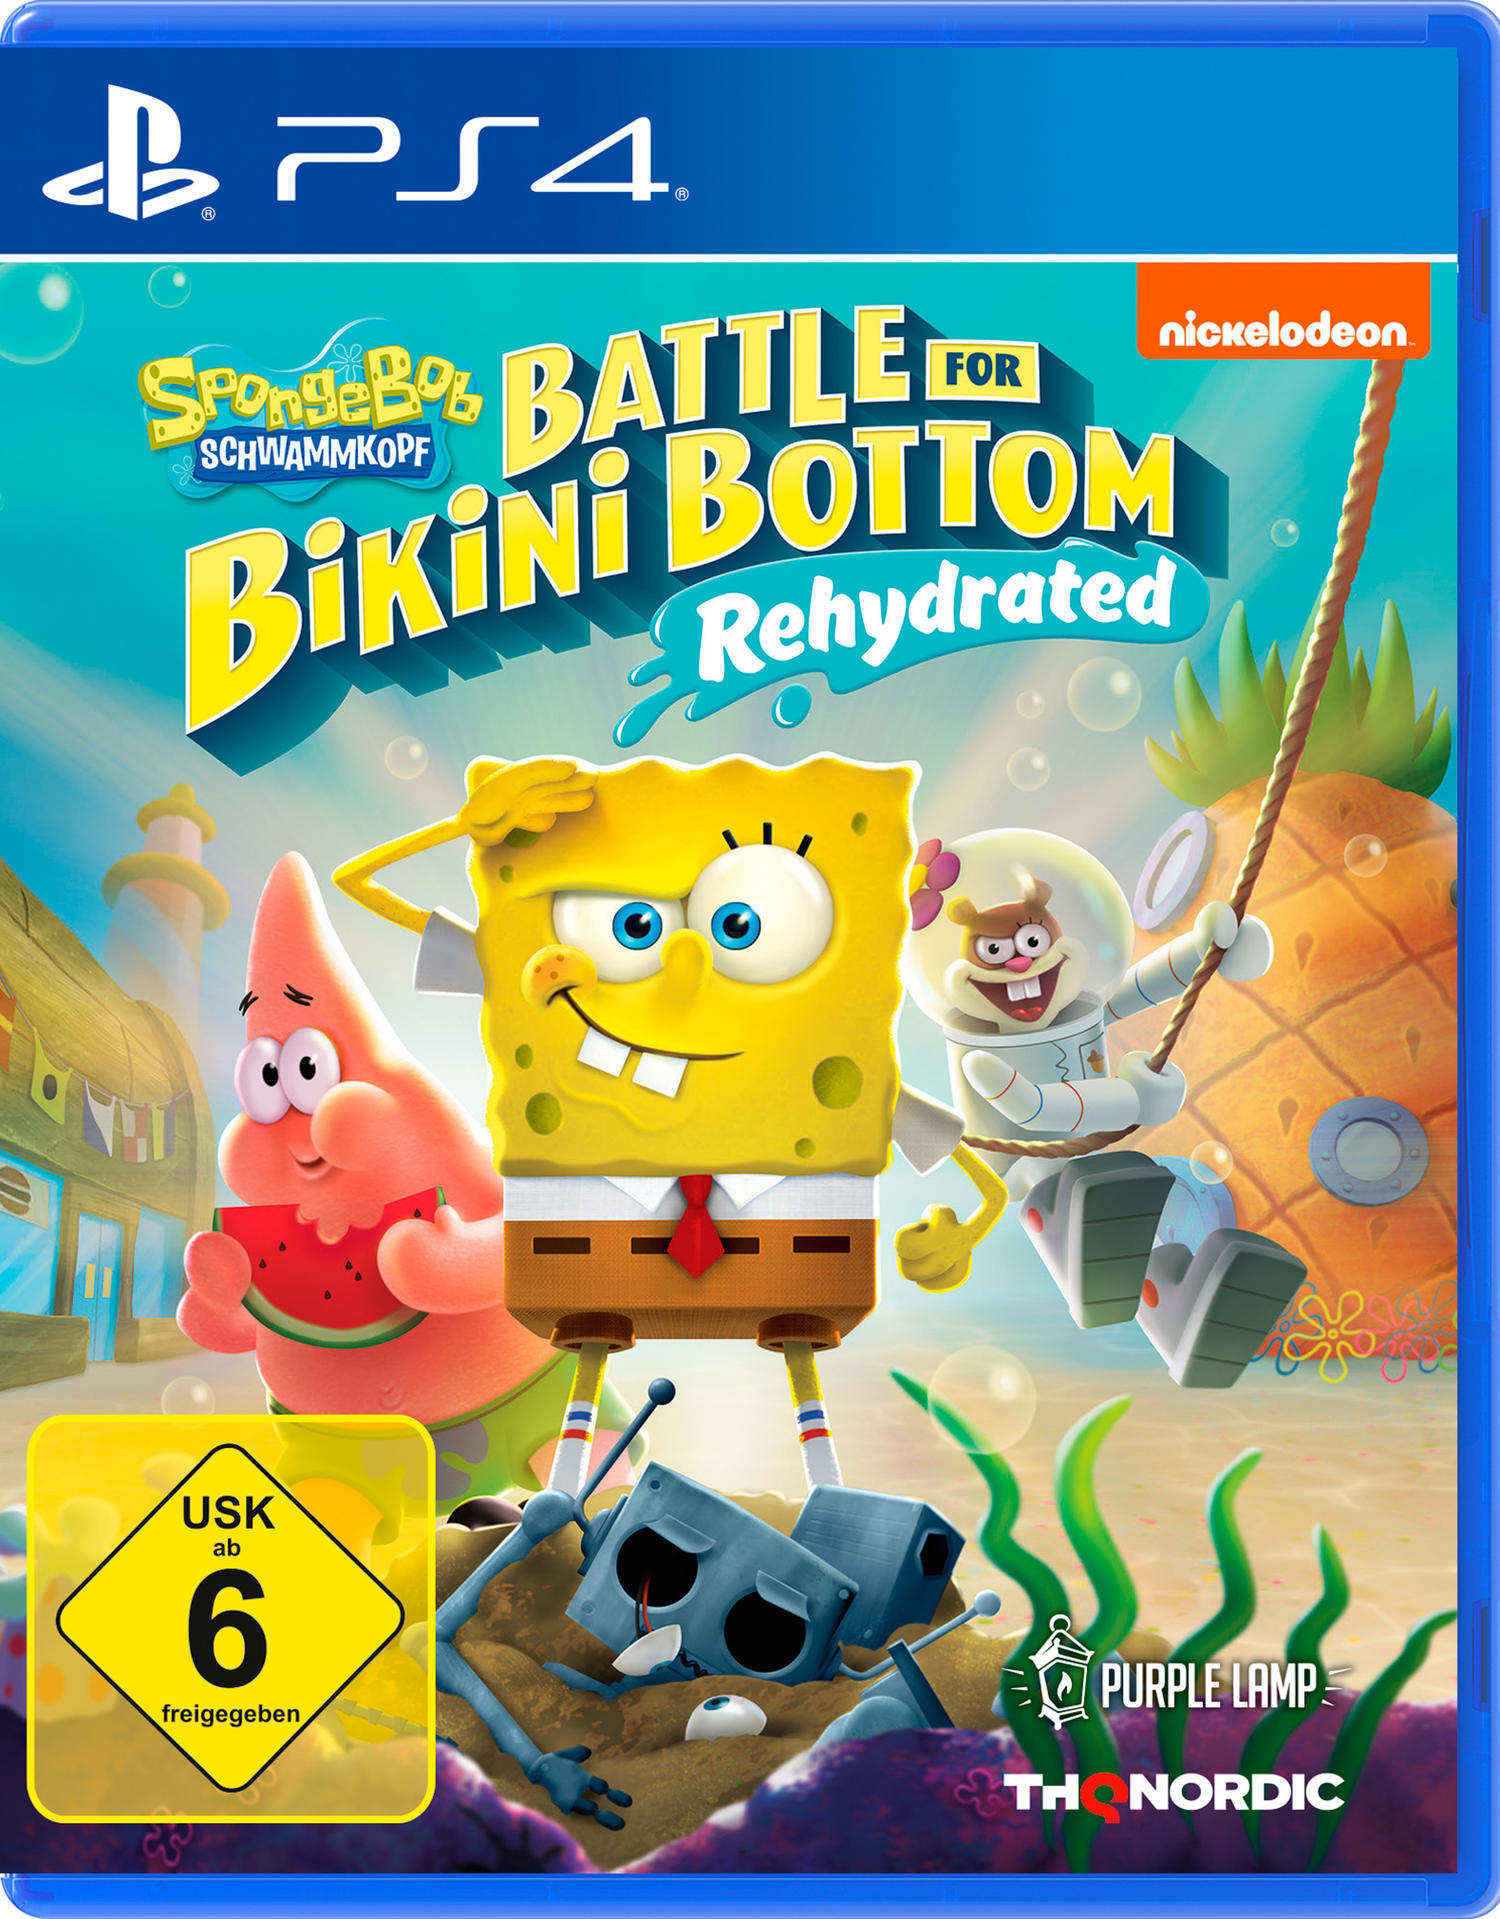 Bottom SquarePants: Spongebob [PlayStation Rehydrated - - 4] Bikini for Battle